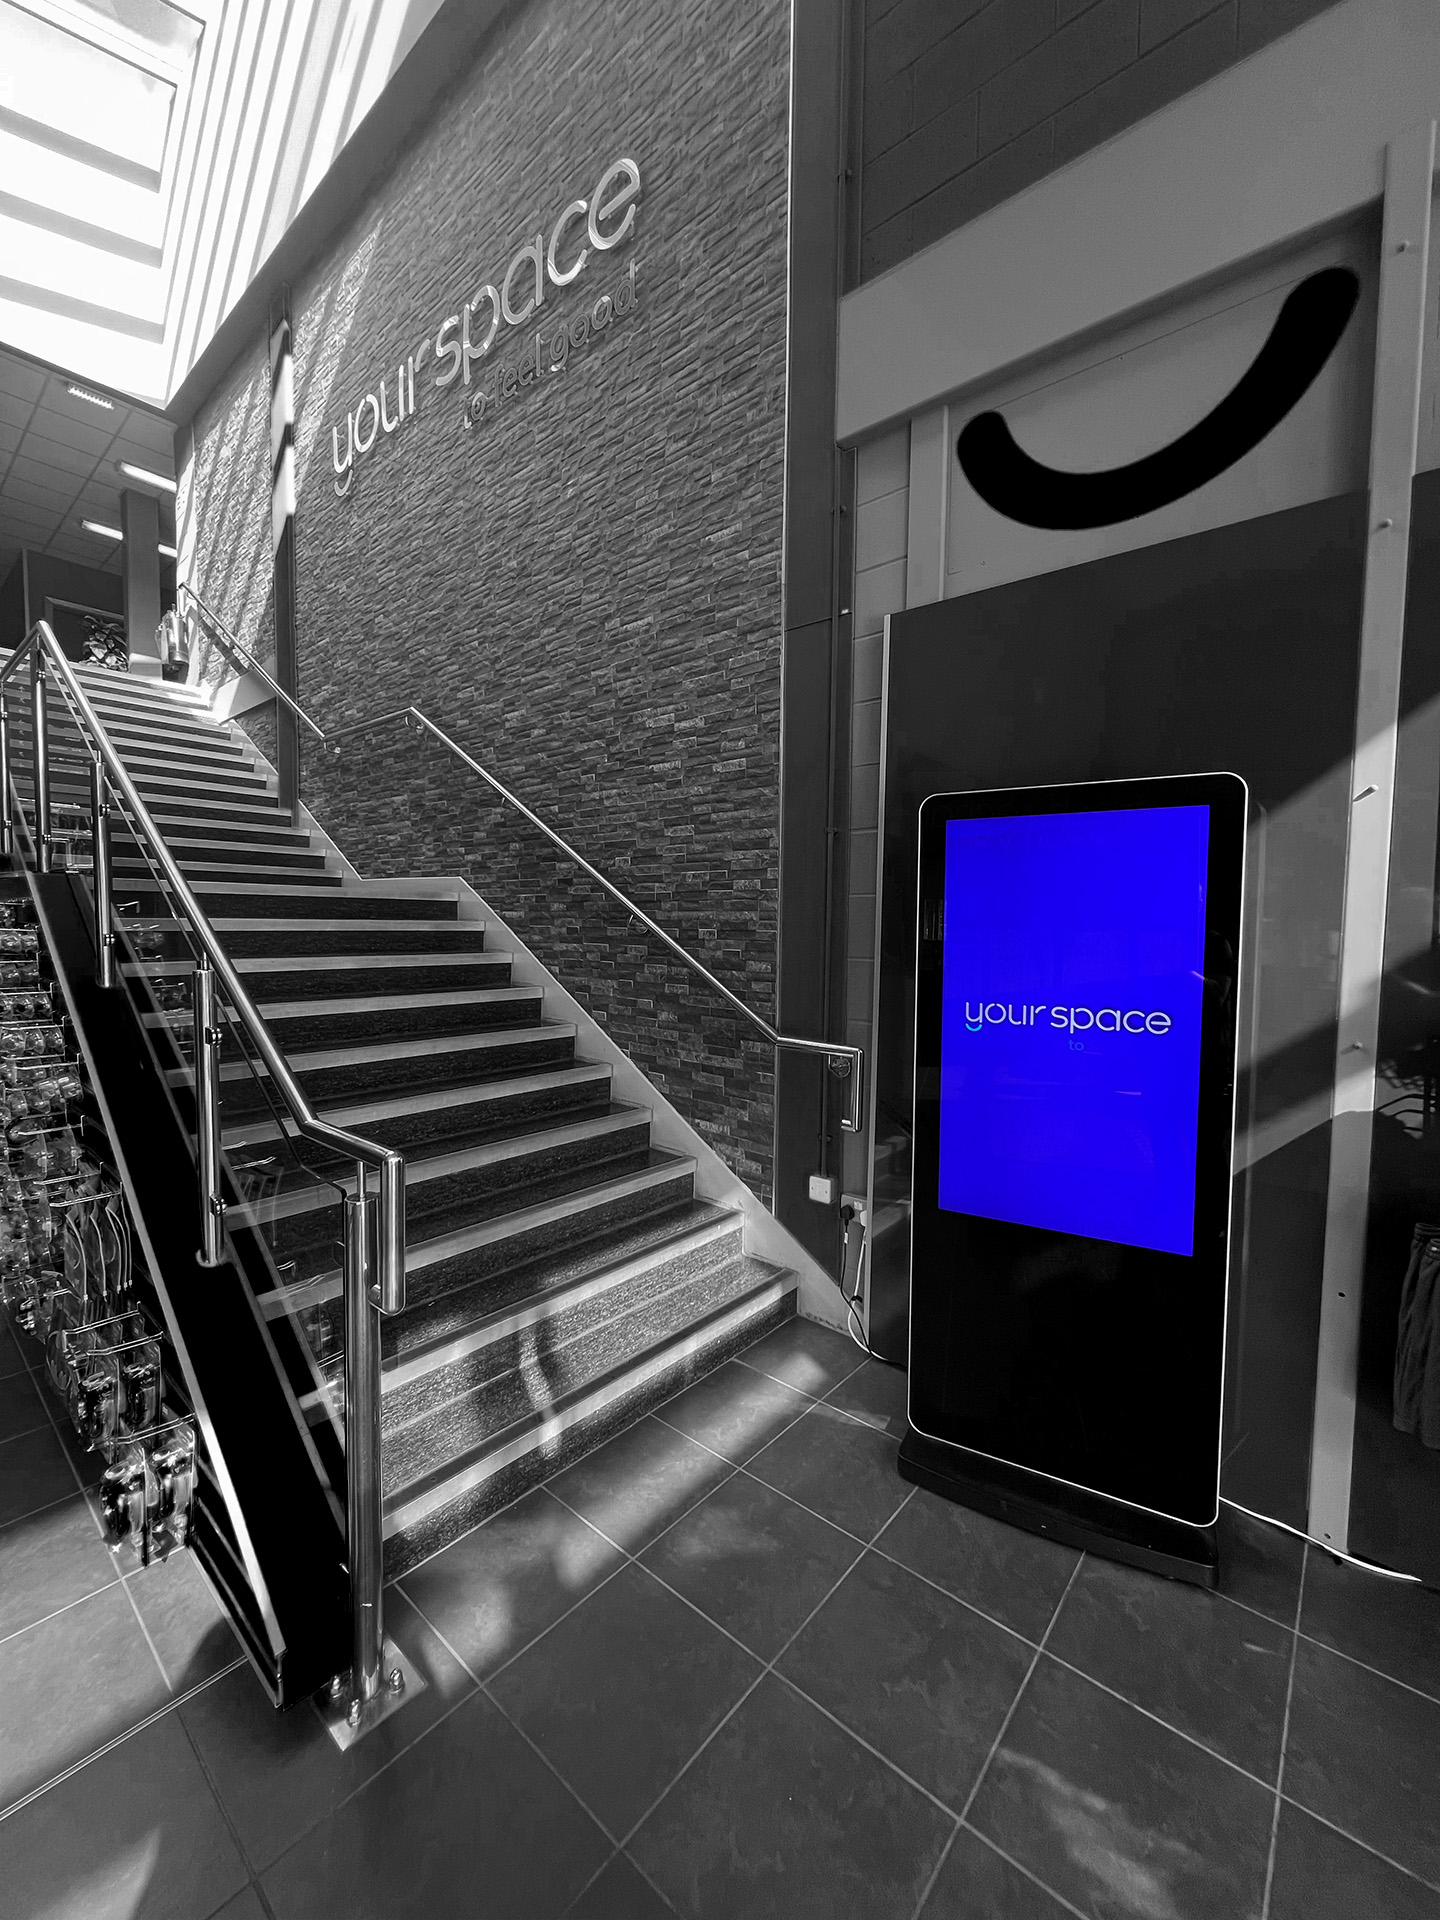 embed signage digital signage software - barnsley premier leisure BPL - totem display stairs gym fitness leisure digital signage